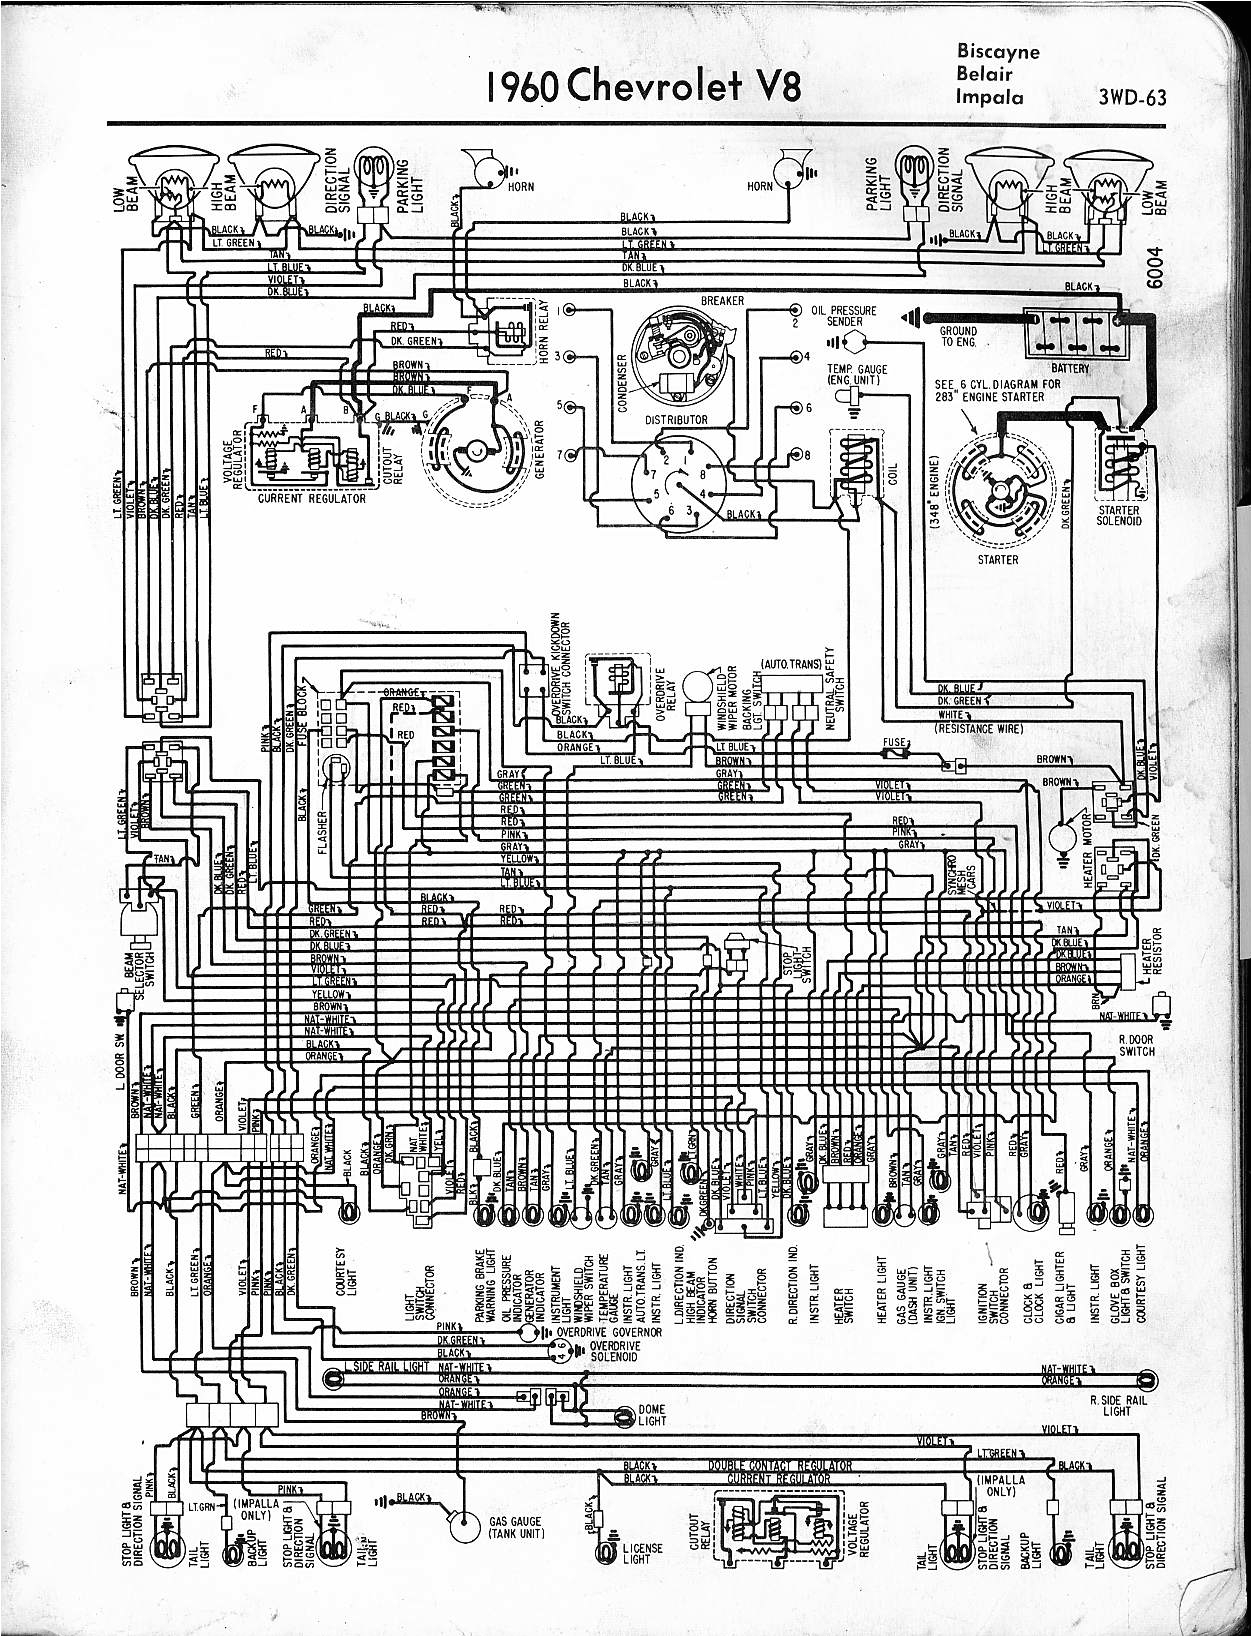 57 65 chevy wiring diagrams 1964 chevy impala starter wiring diagram 1960 v8 biscayne belair